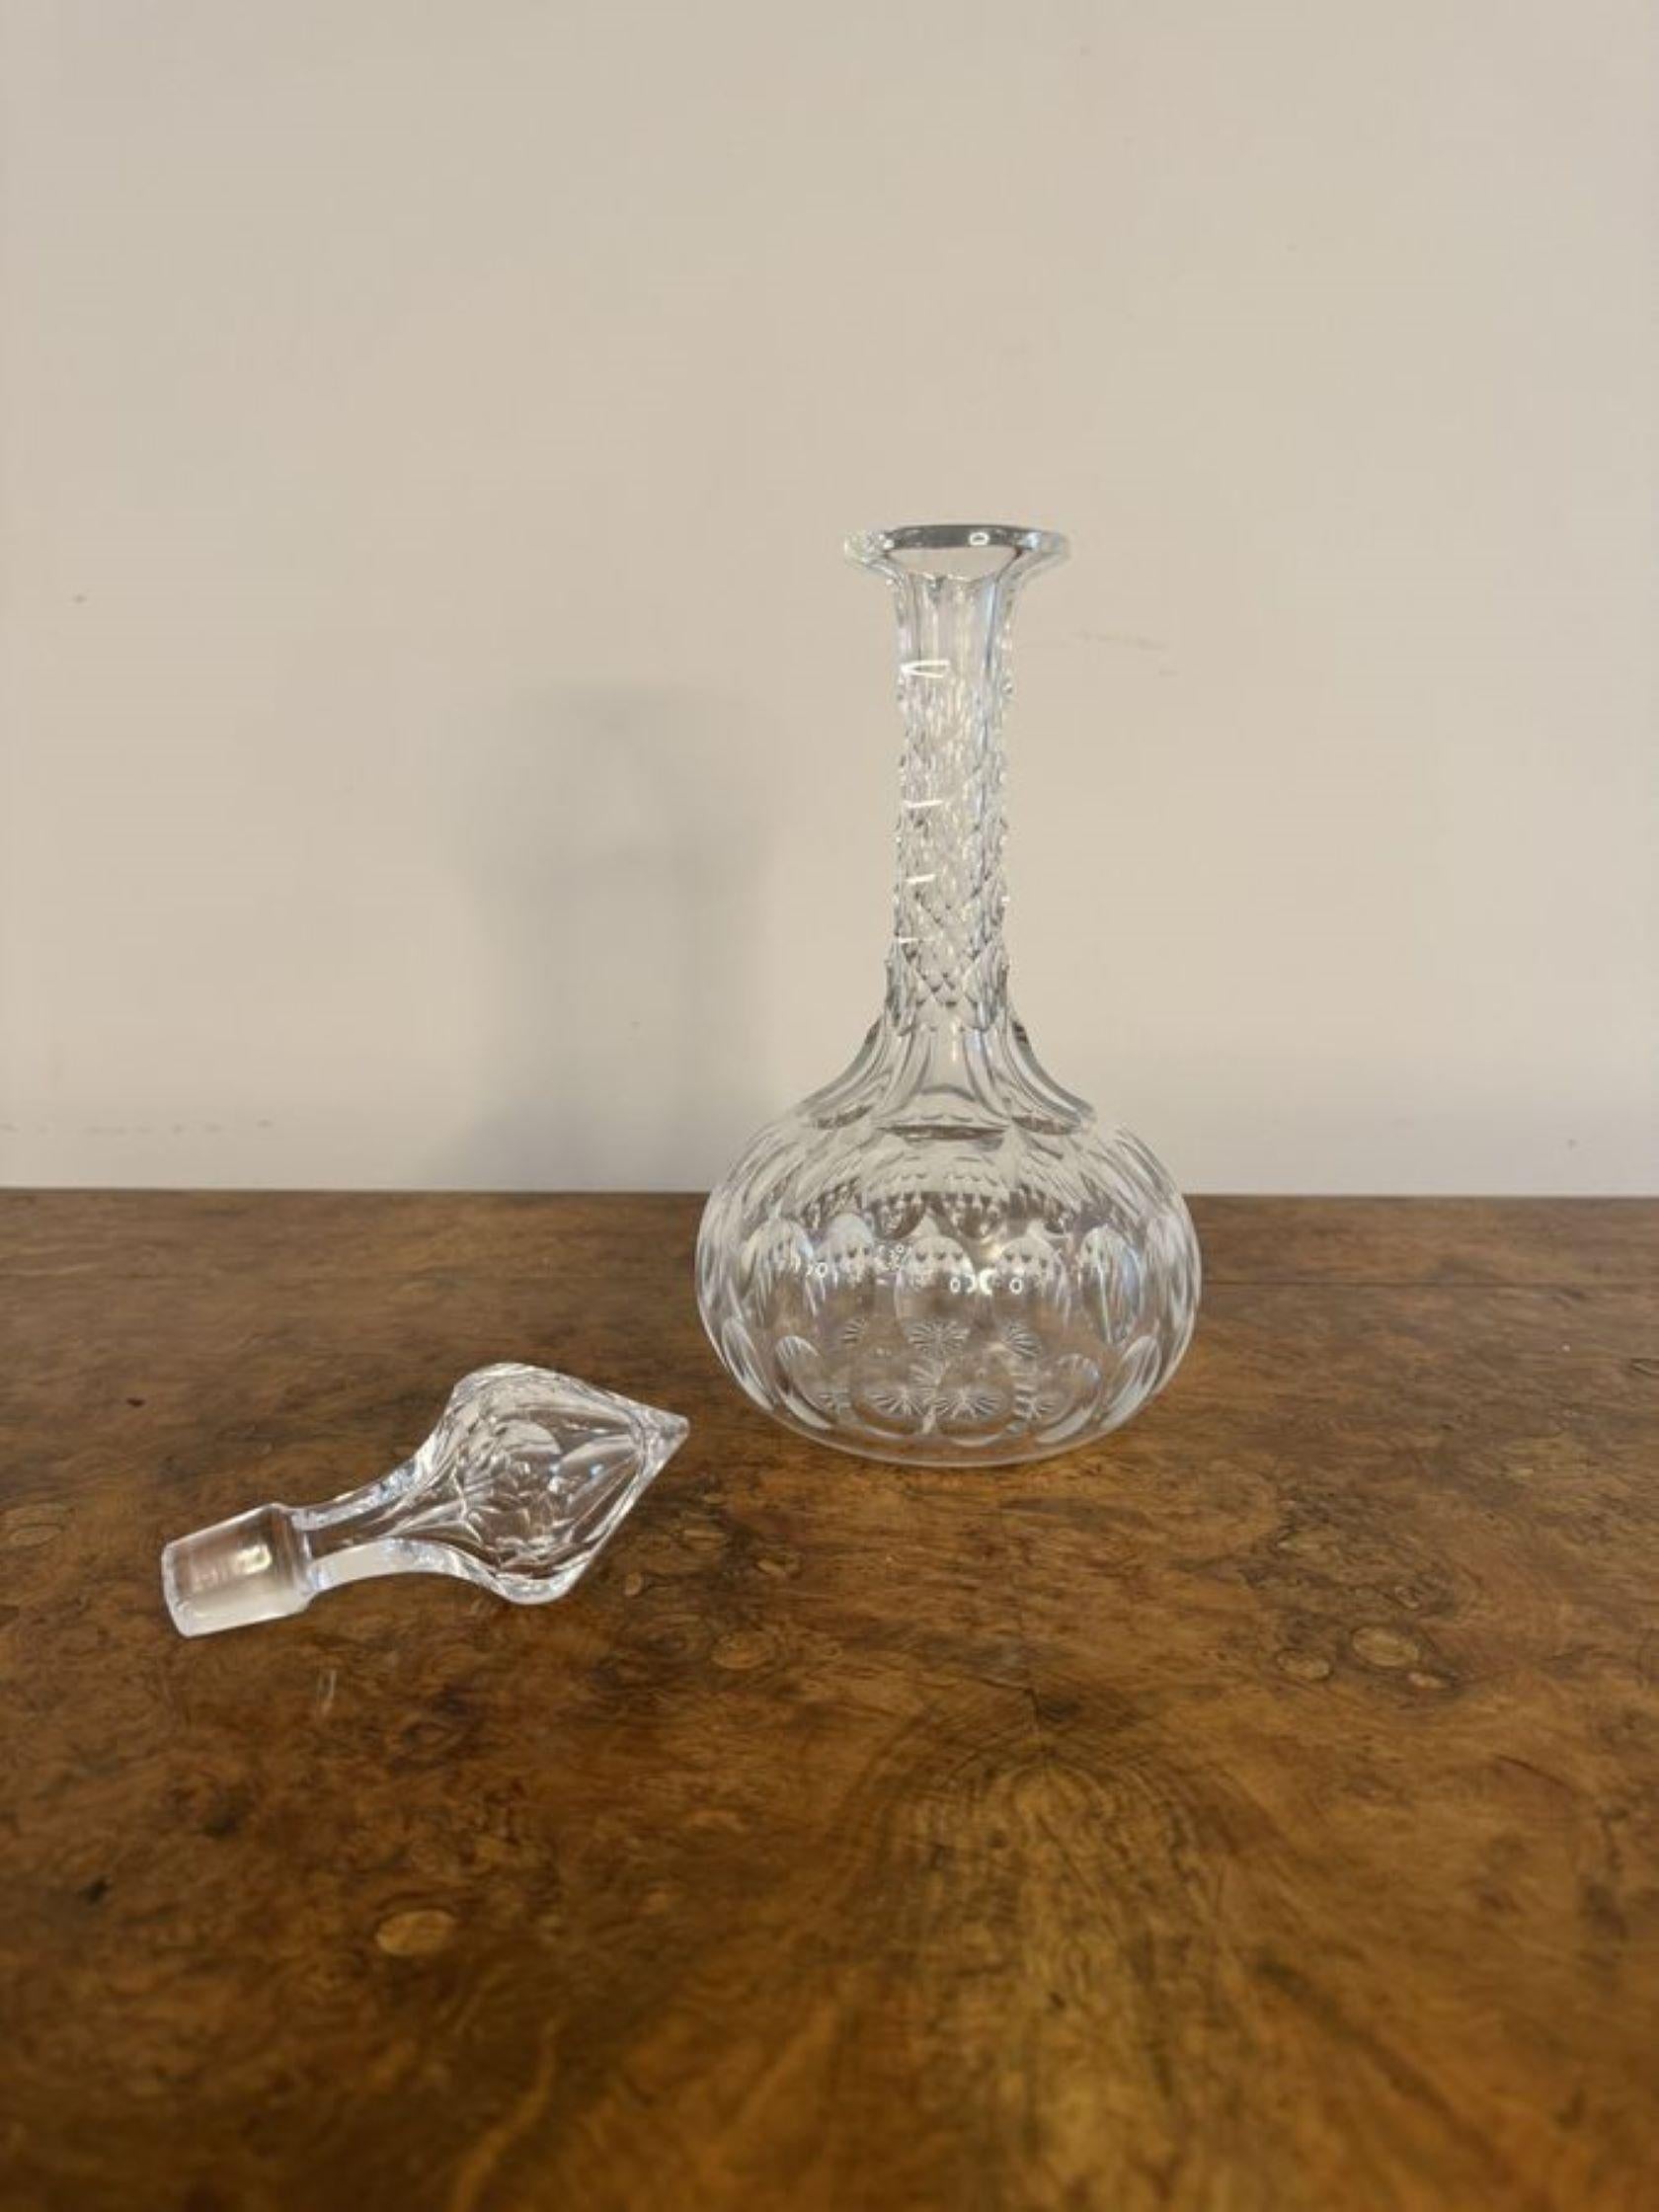 Stunning quality antique Edwardian cut glass decanter having a quality antique Edwardian cut glass decanter with fantastic cut glass detail and the original shaped cut glass stopper.

D. 1900